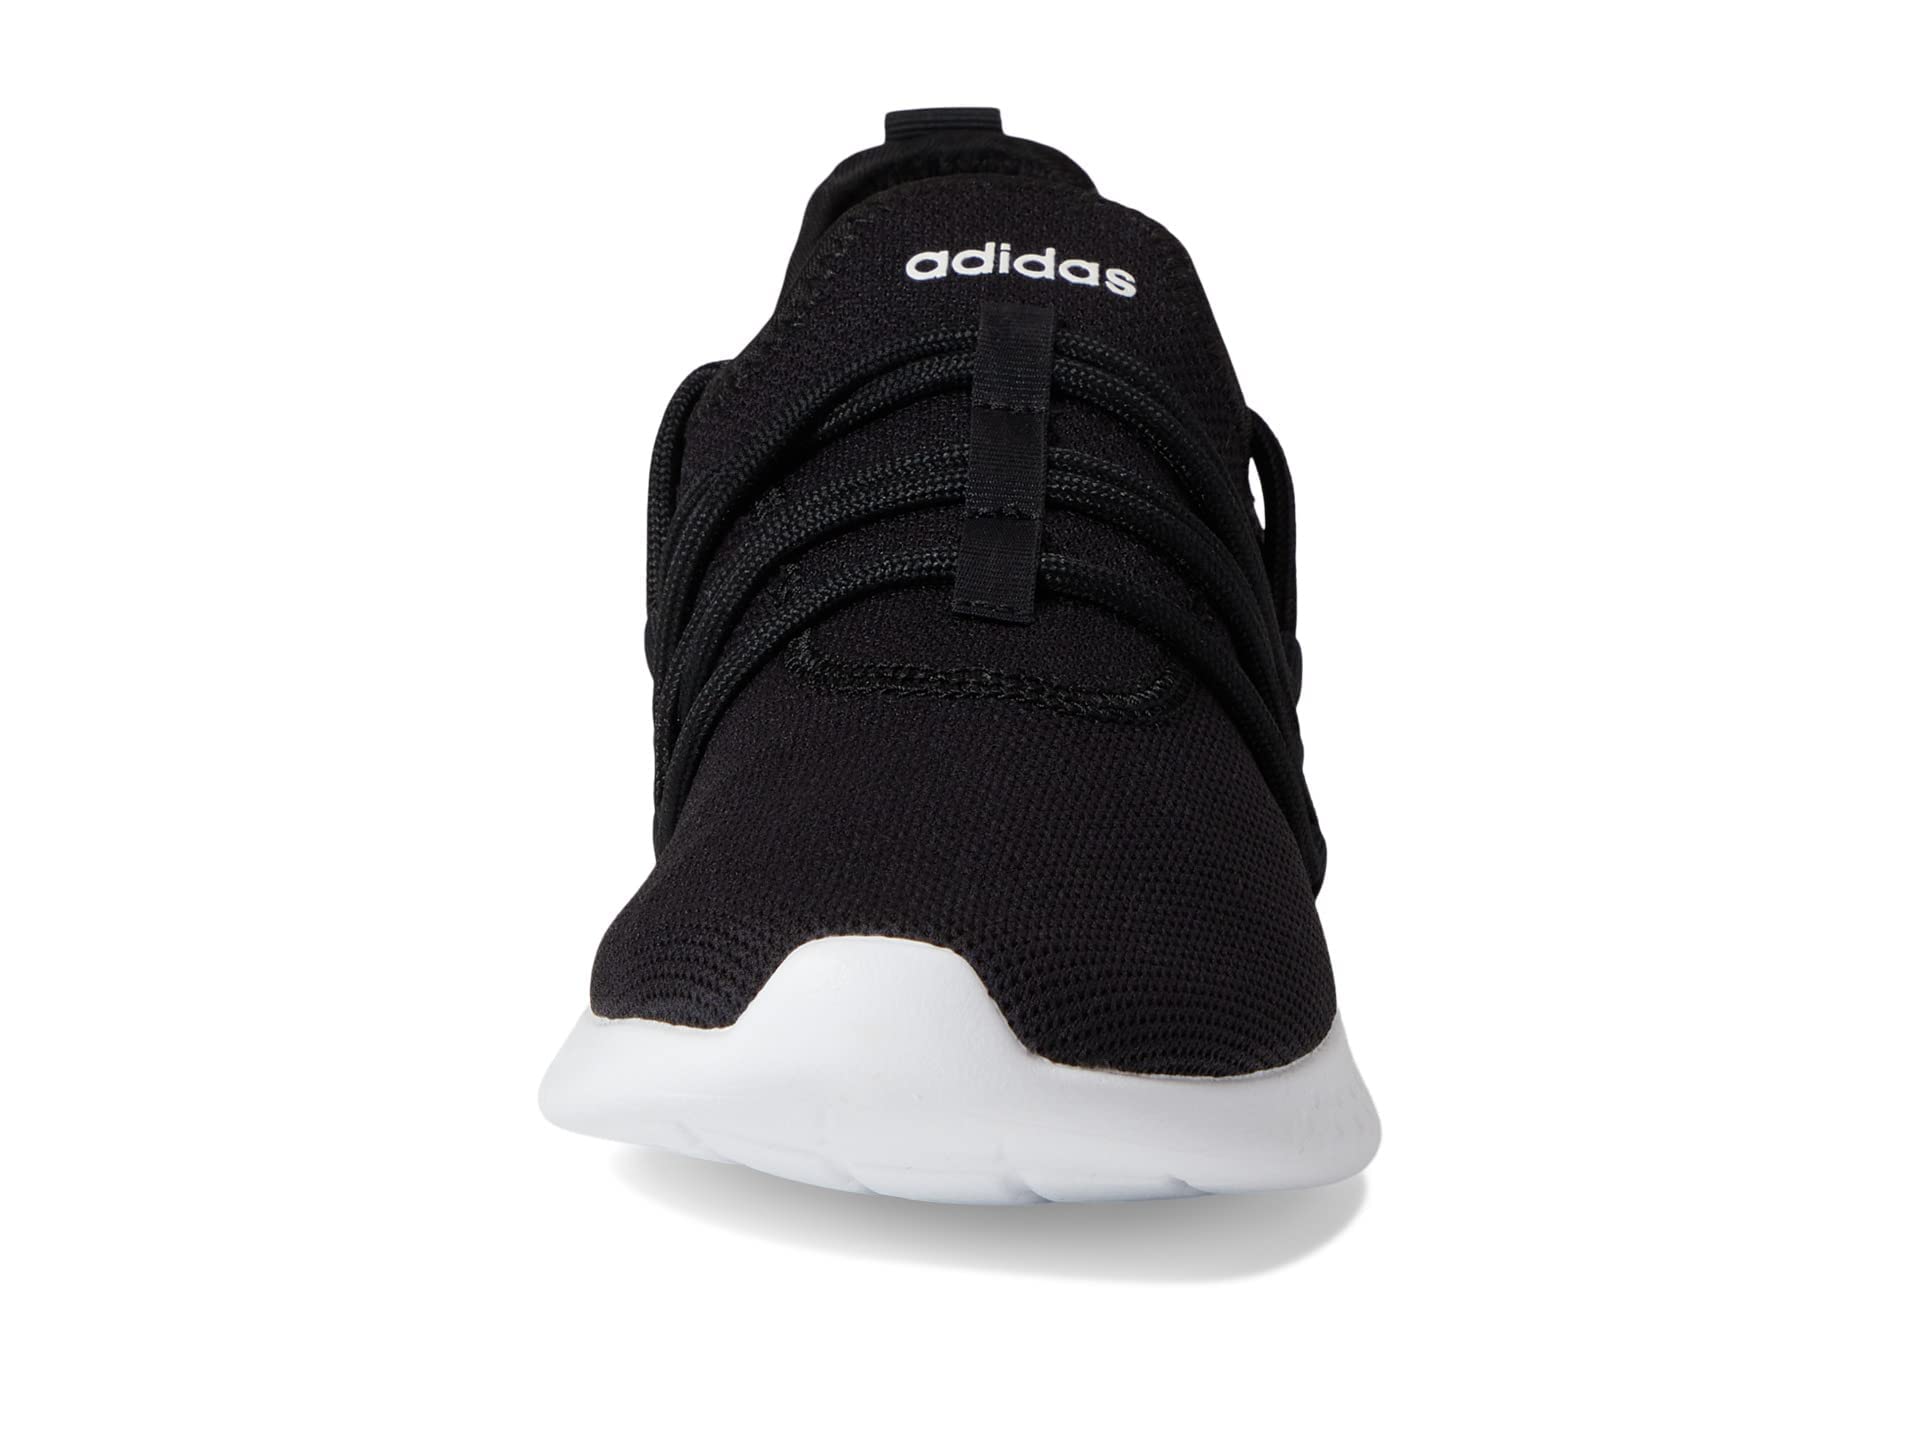 adidas Women's Puremotion Adapt 2.0 Running Shoe, Black/Black/White, 8